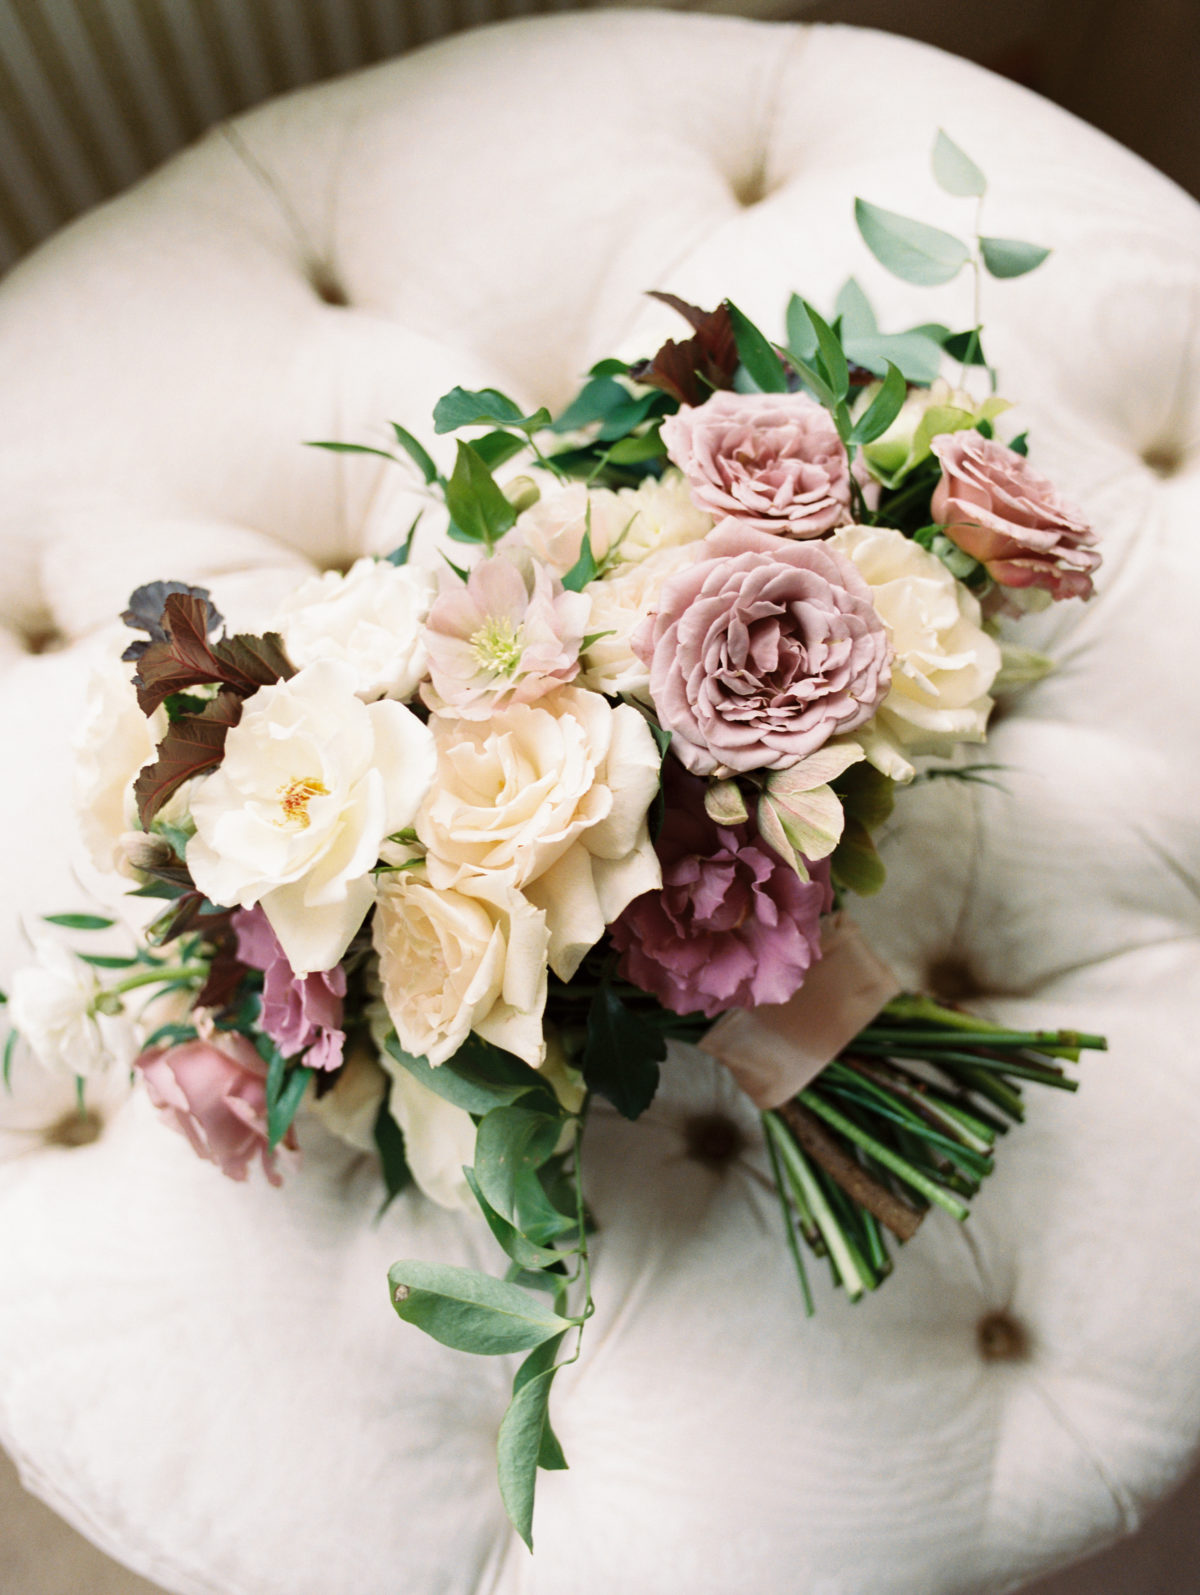 Muted pastels wedding bouquet by Amy Lauren Floral Design.